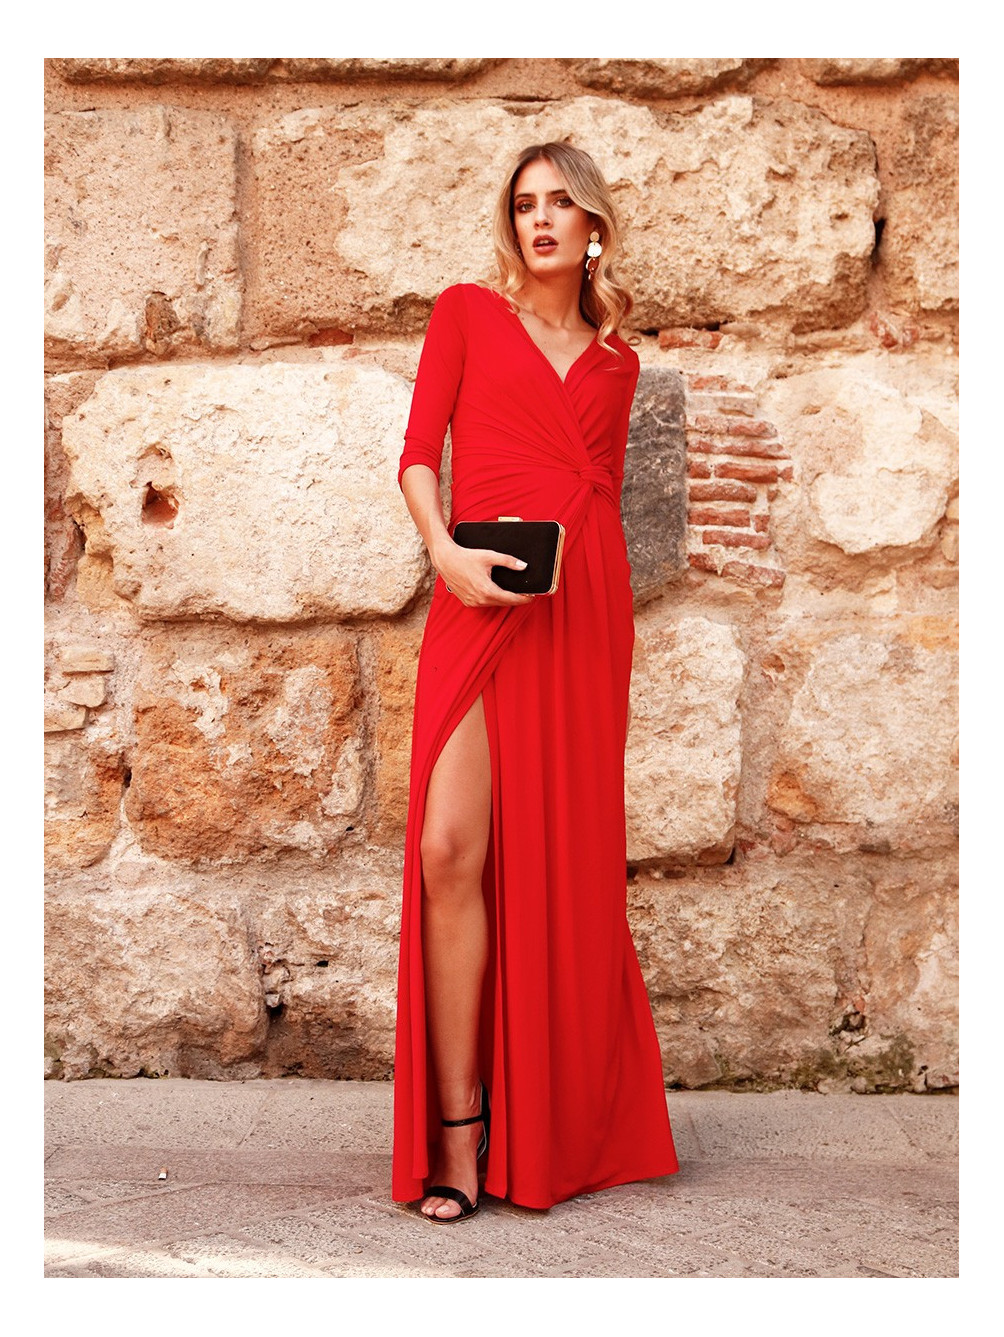 Vestido Cádiz | Vestido Rojo de Fiesta | Mariquita Trasquilá